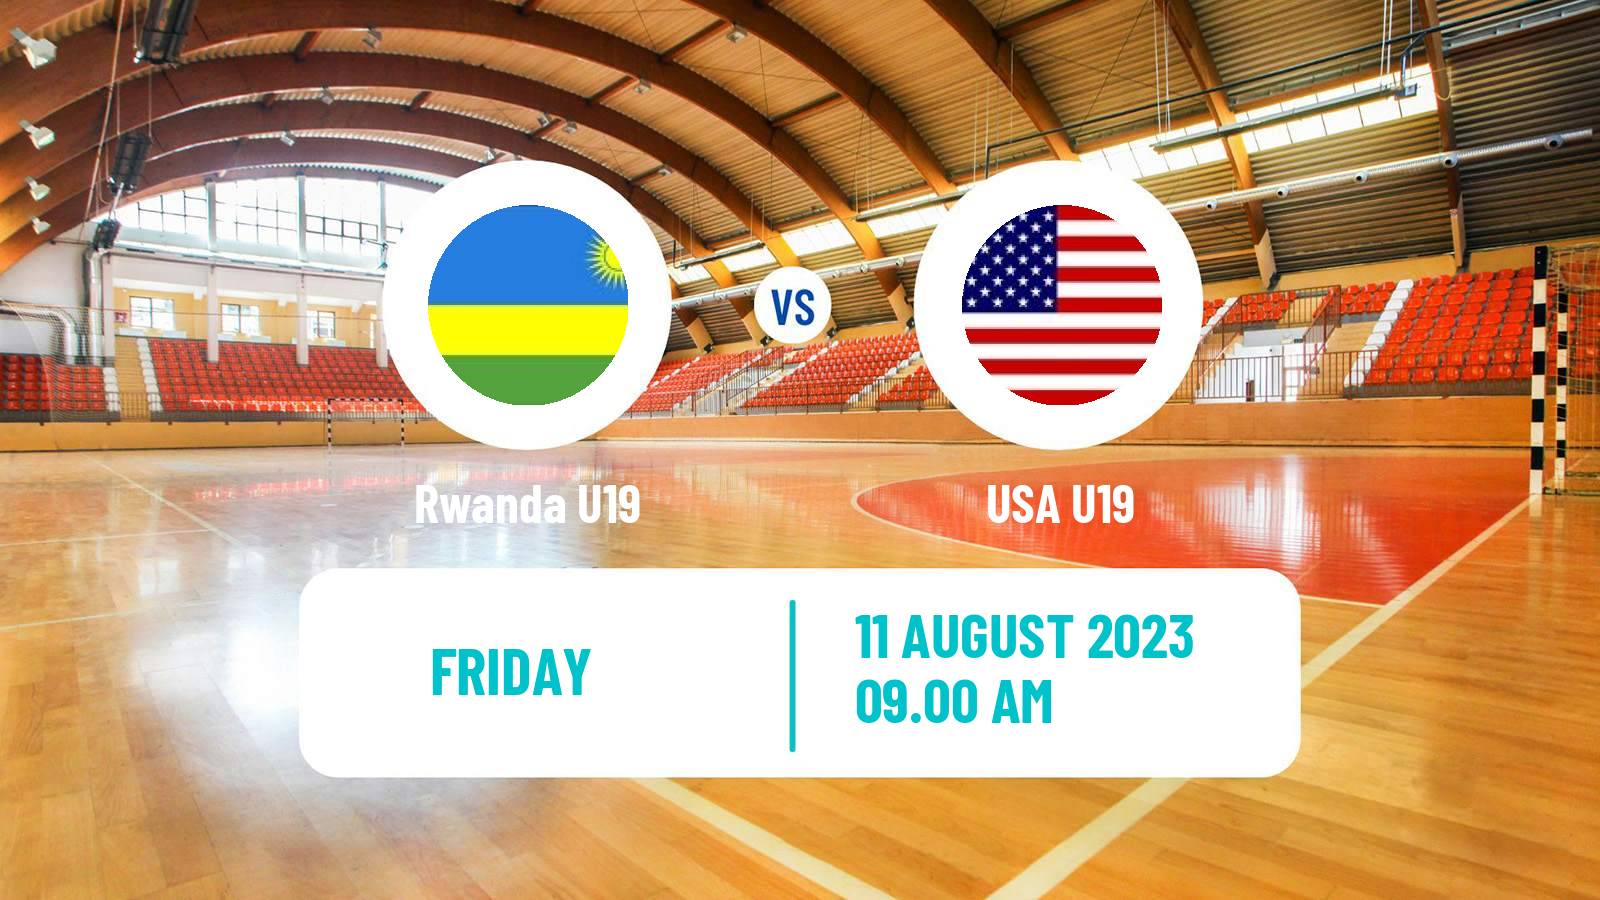 Handball World Championship U19 Handball Rwanda U19 - USA U19